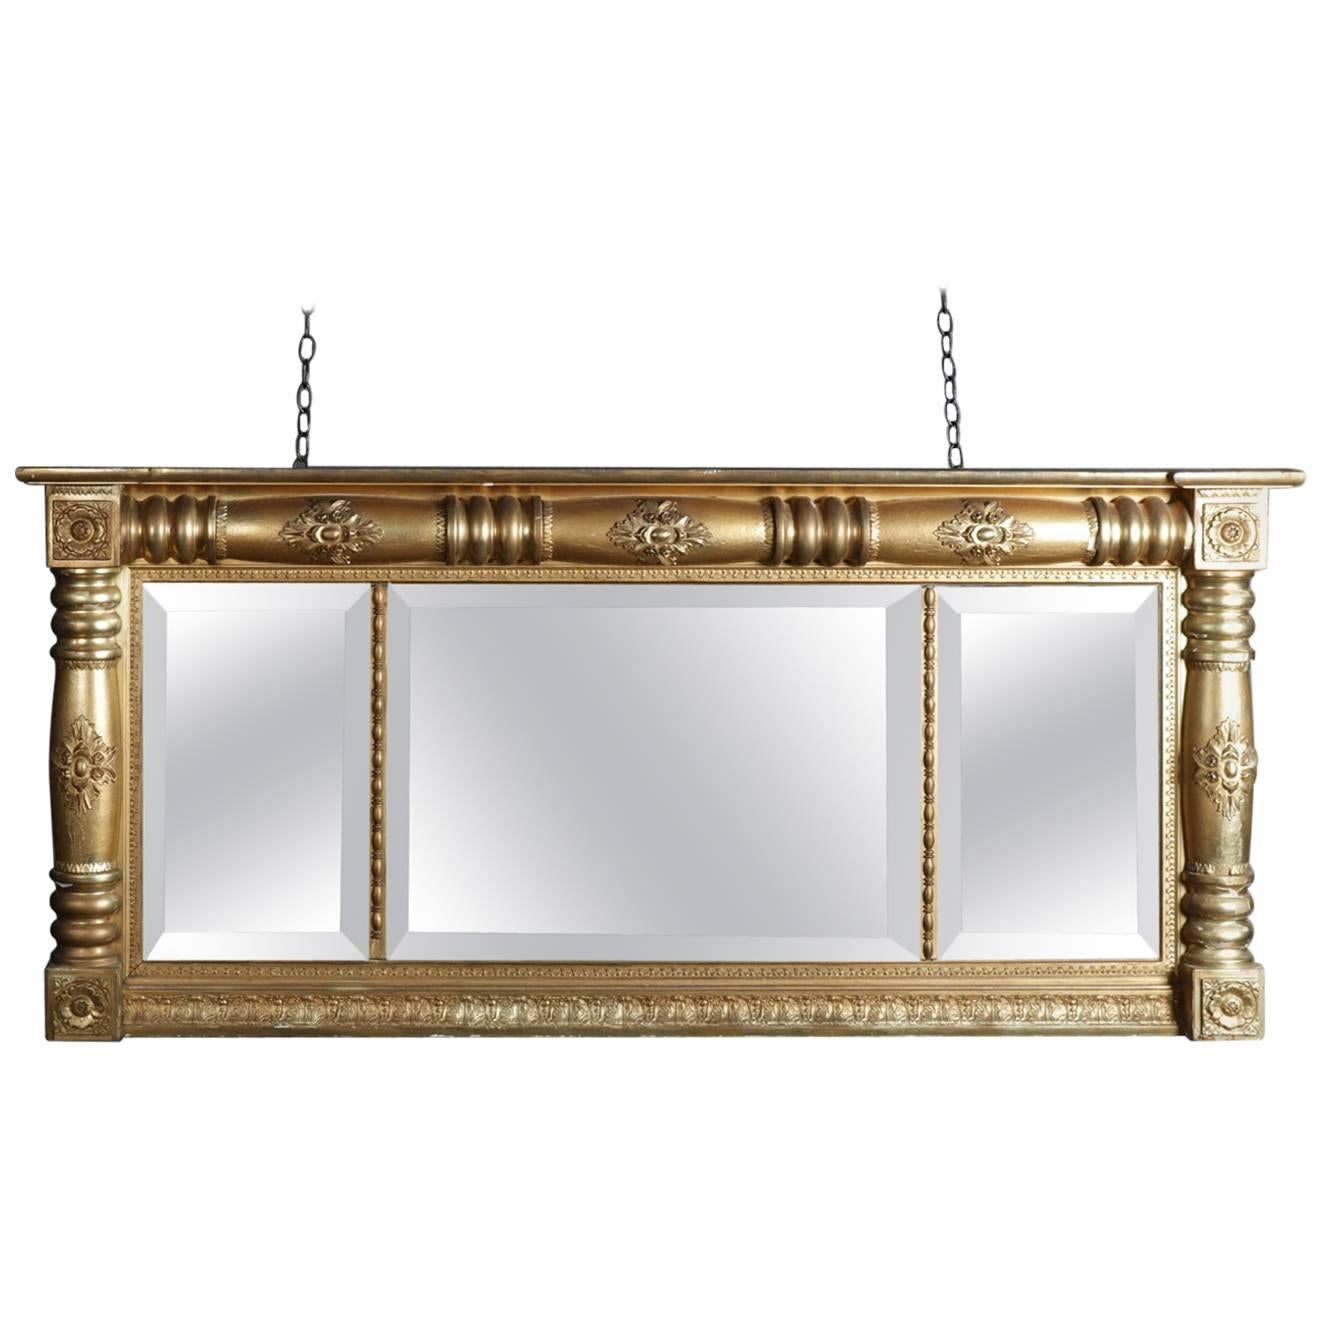 Antique American Empire Gold Gilt Triptych over Mantel Mirror, 19th Century